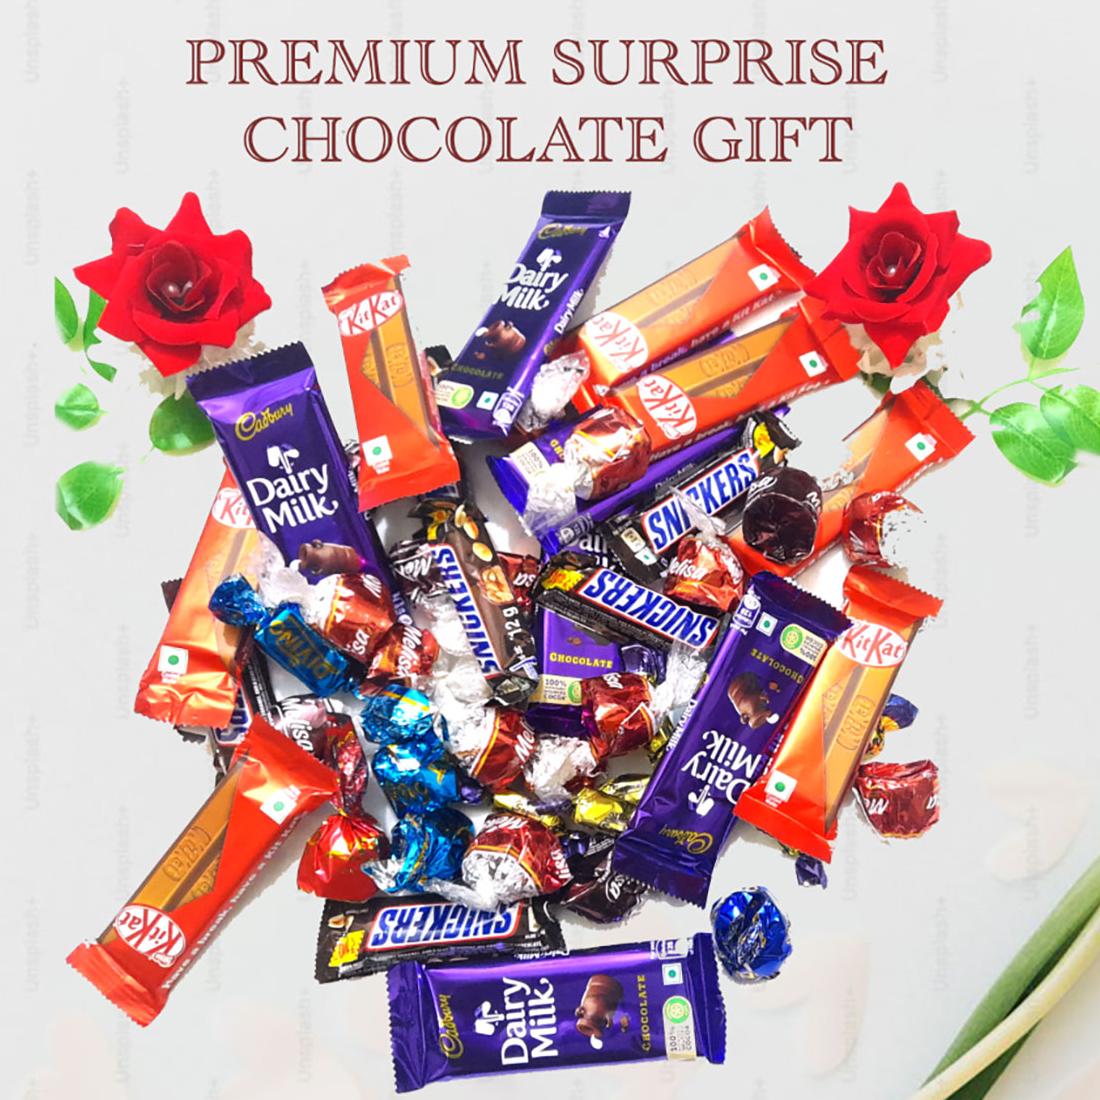 Premium Surprise Chocolate Gift Box - SKU-1220